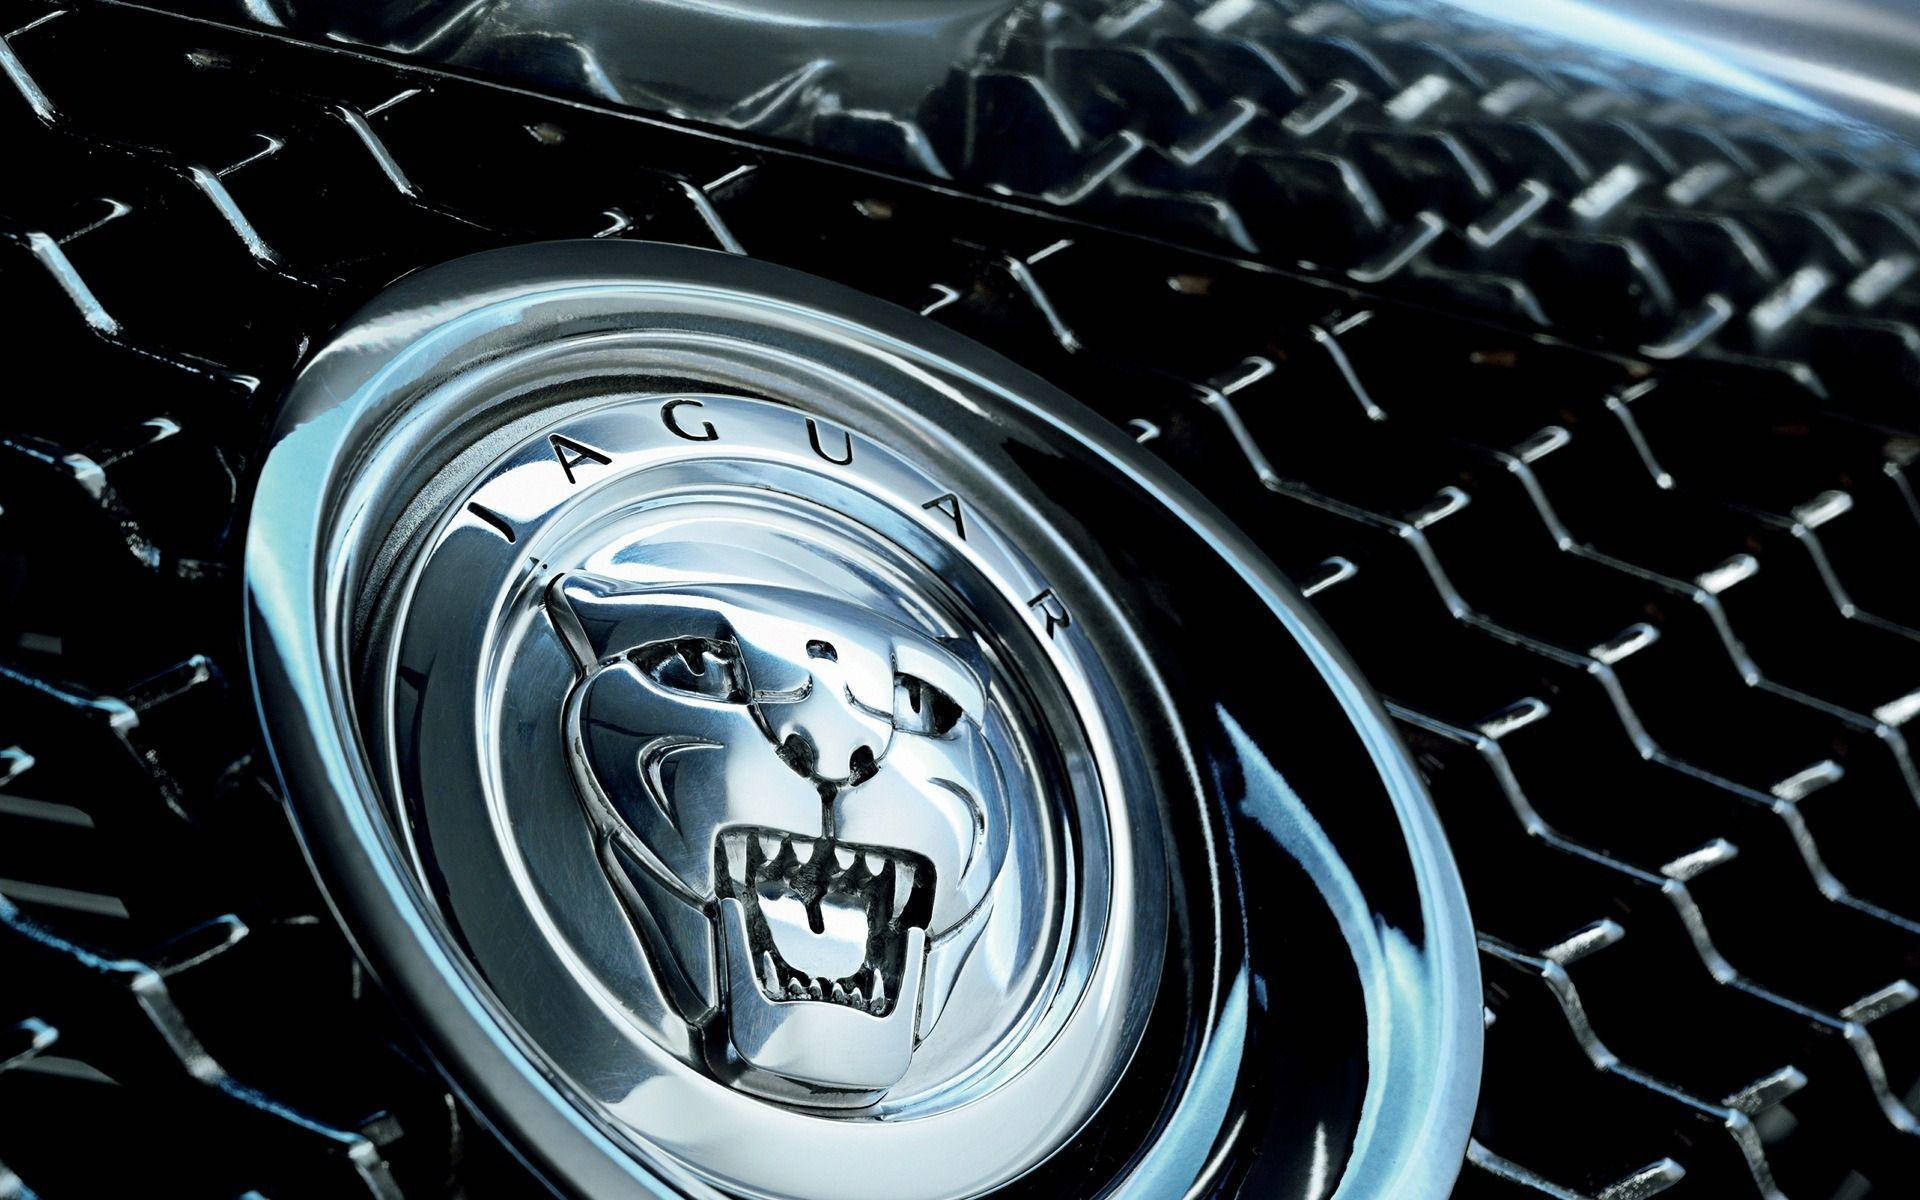 "The Signature of Luxury: A Silver Jaguar Car" Wallpaper